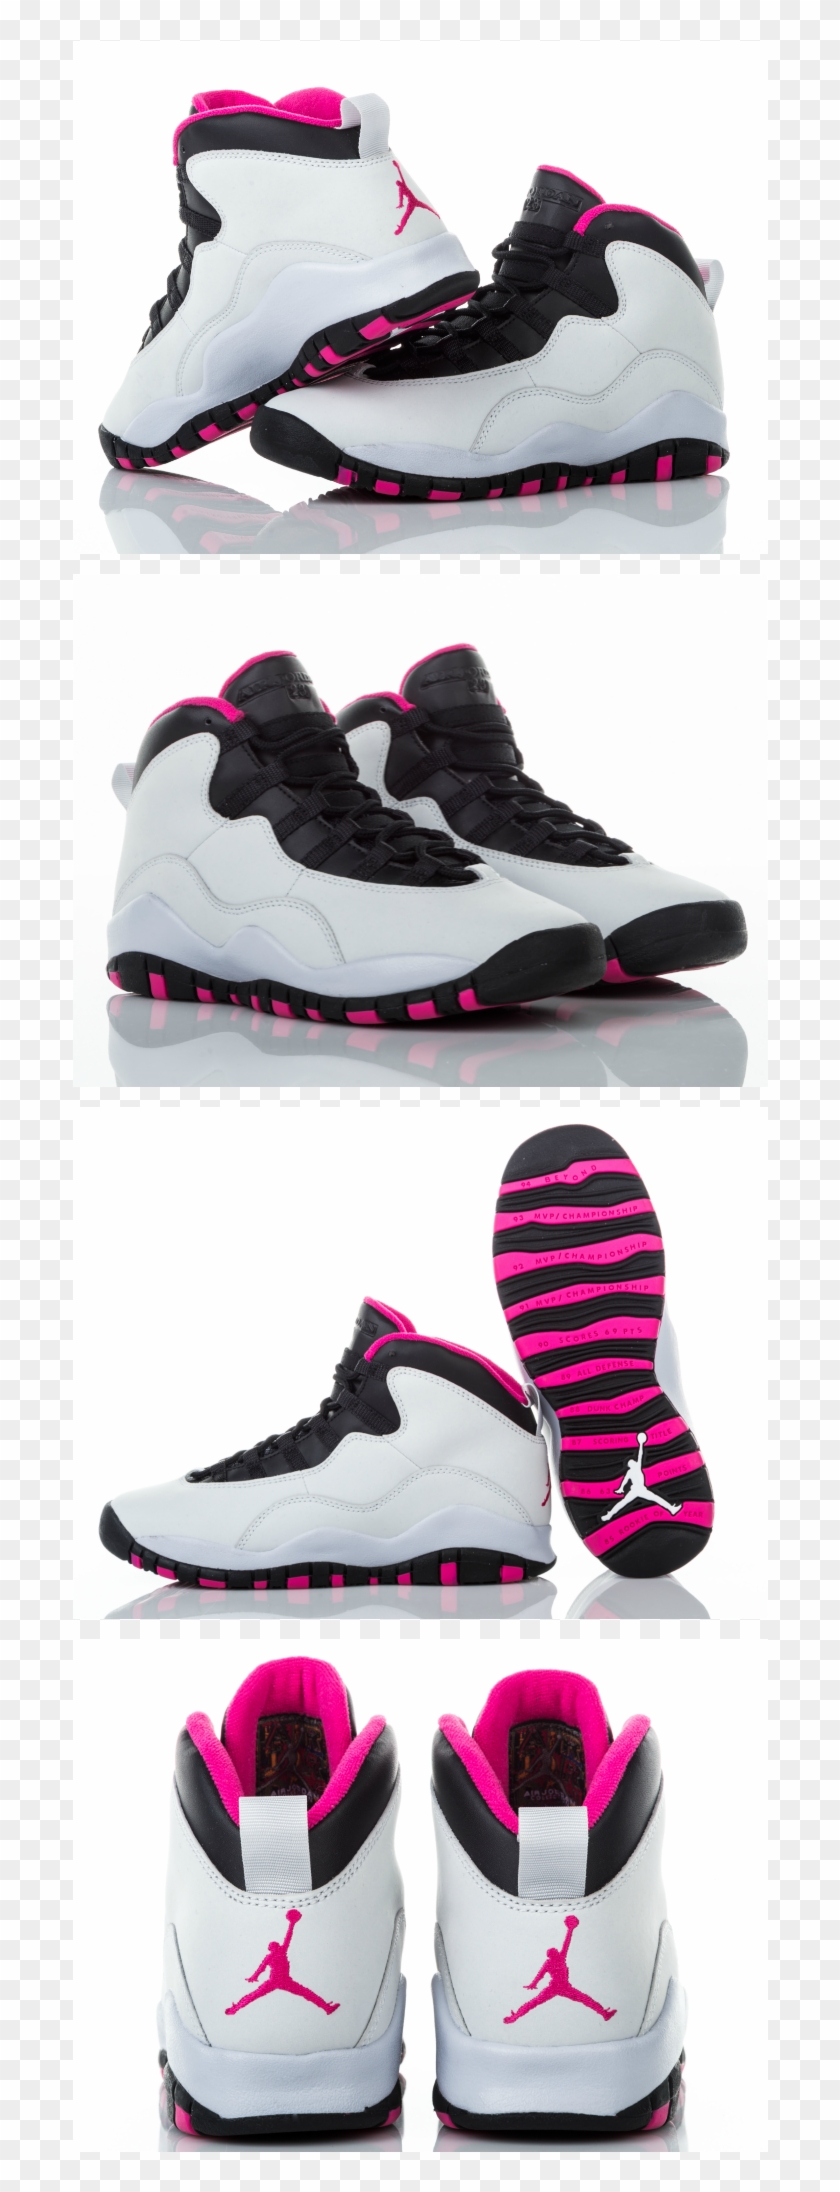 All Michael Jordan Shoes For Girls 